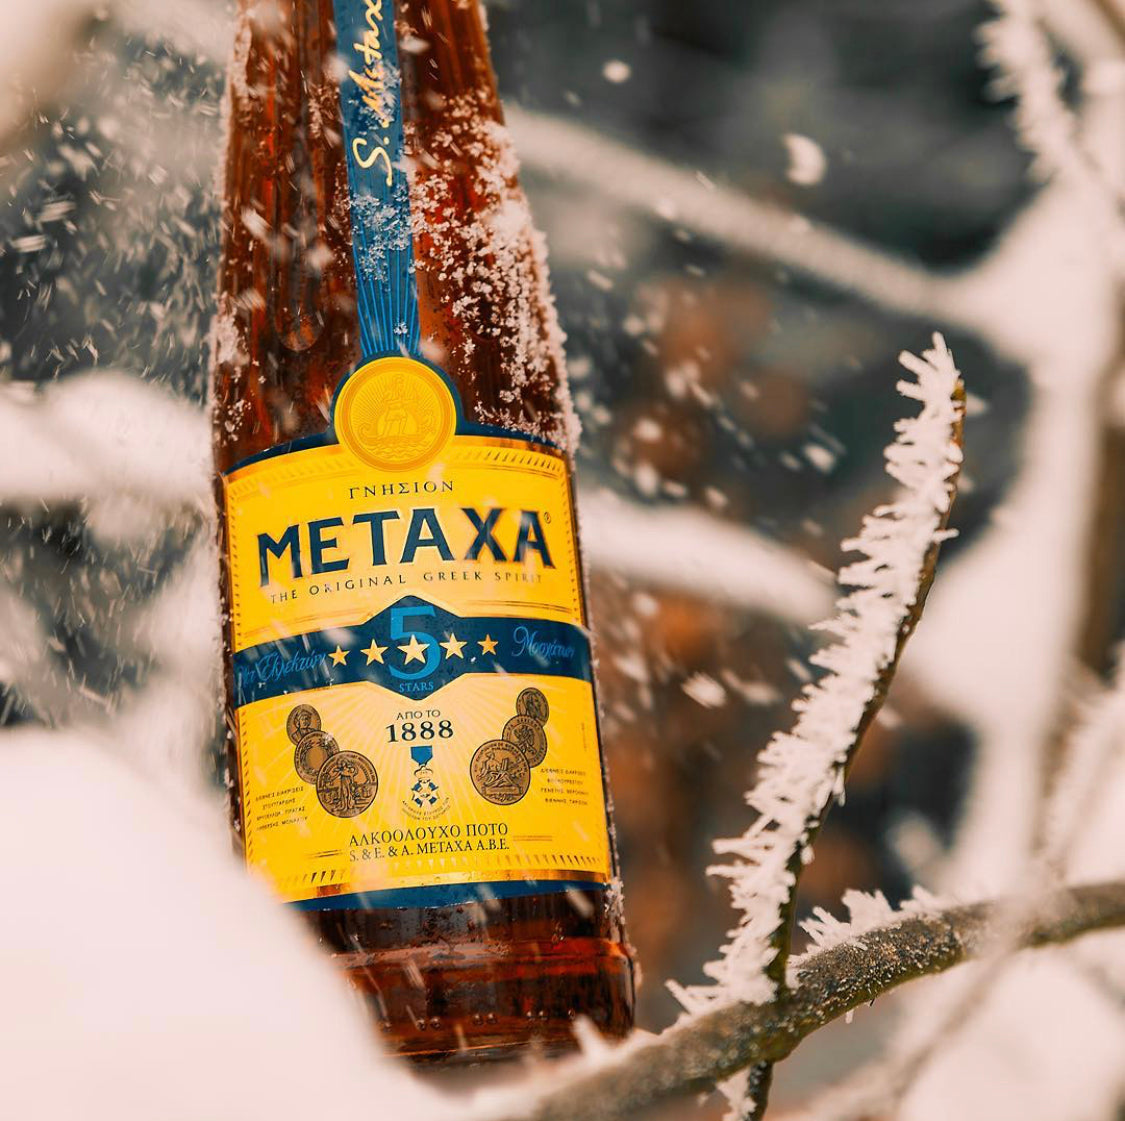 Metaxa 5 Sterne 700ml 40%Vol Brandy Cognac the original greek spirit